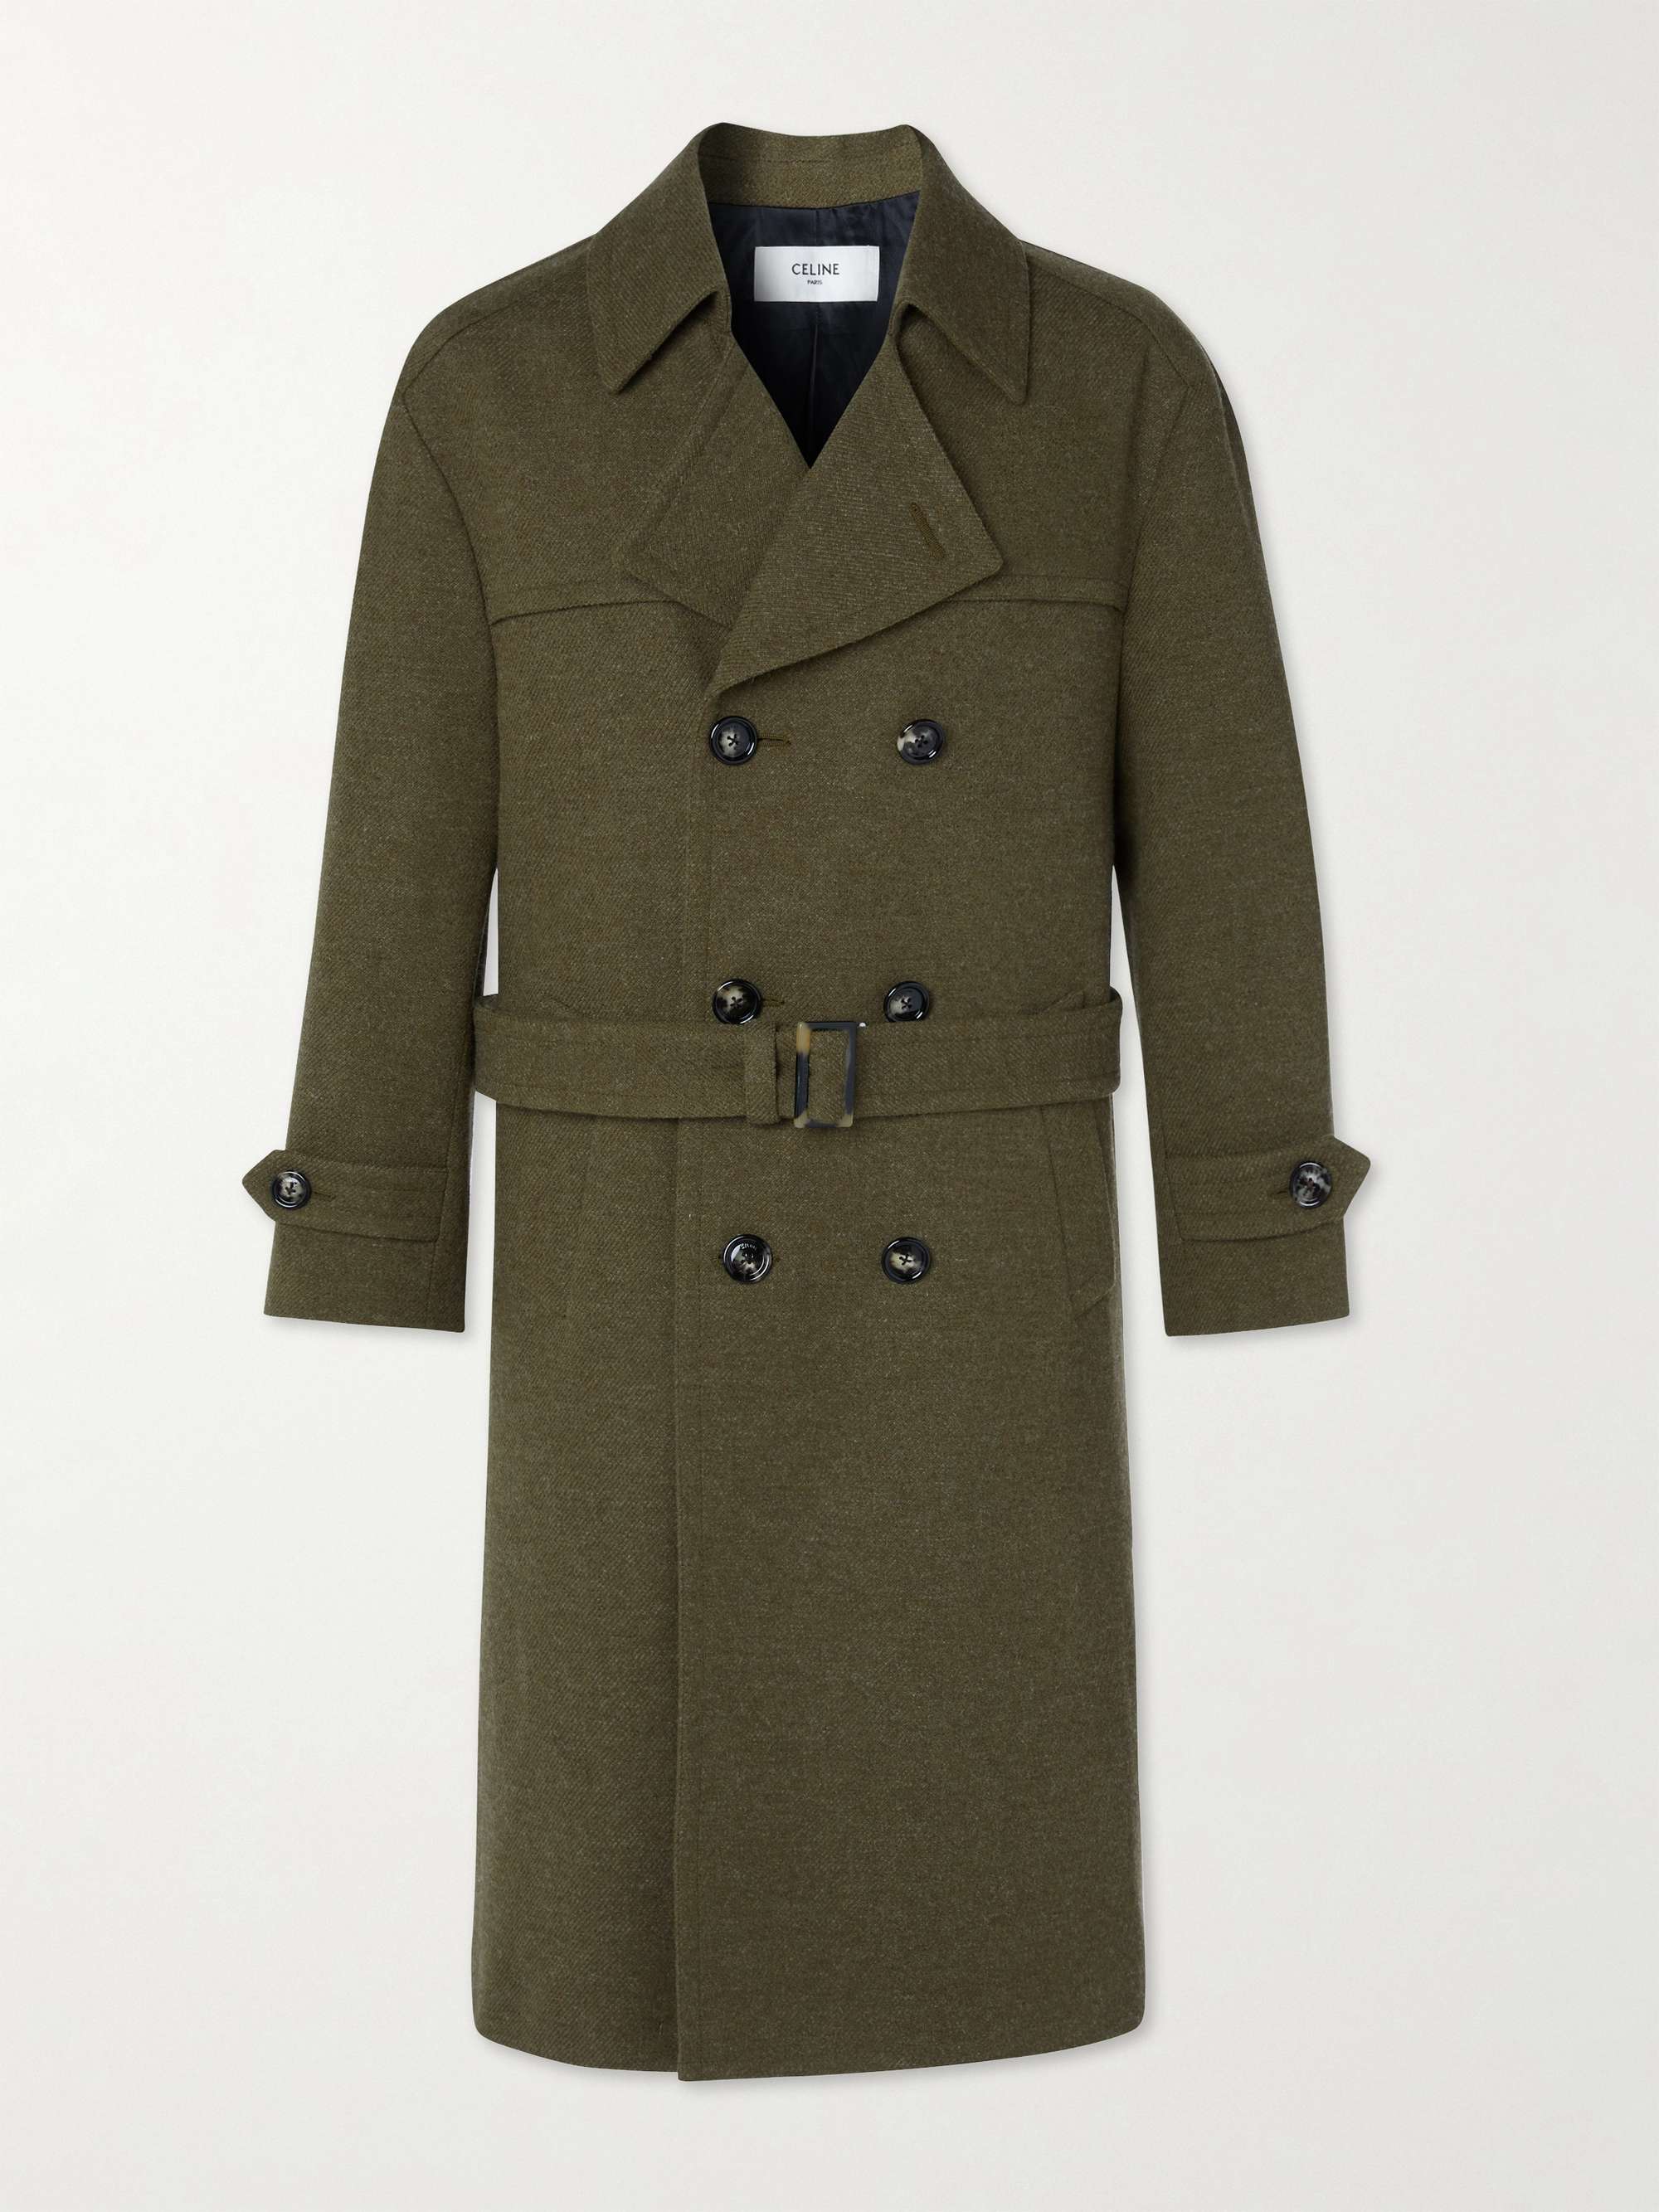 CELINE HOMME Oversized Double-Breasted Wool Trench Coat for Men | MR PORTER